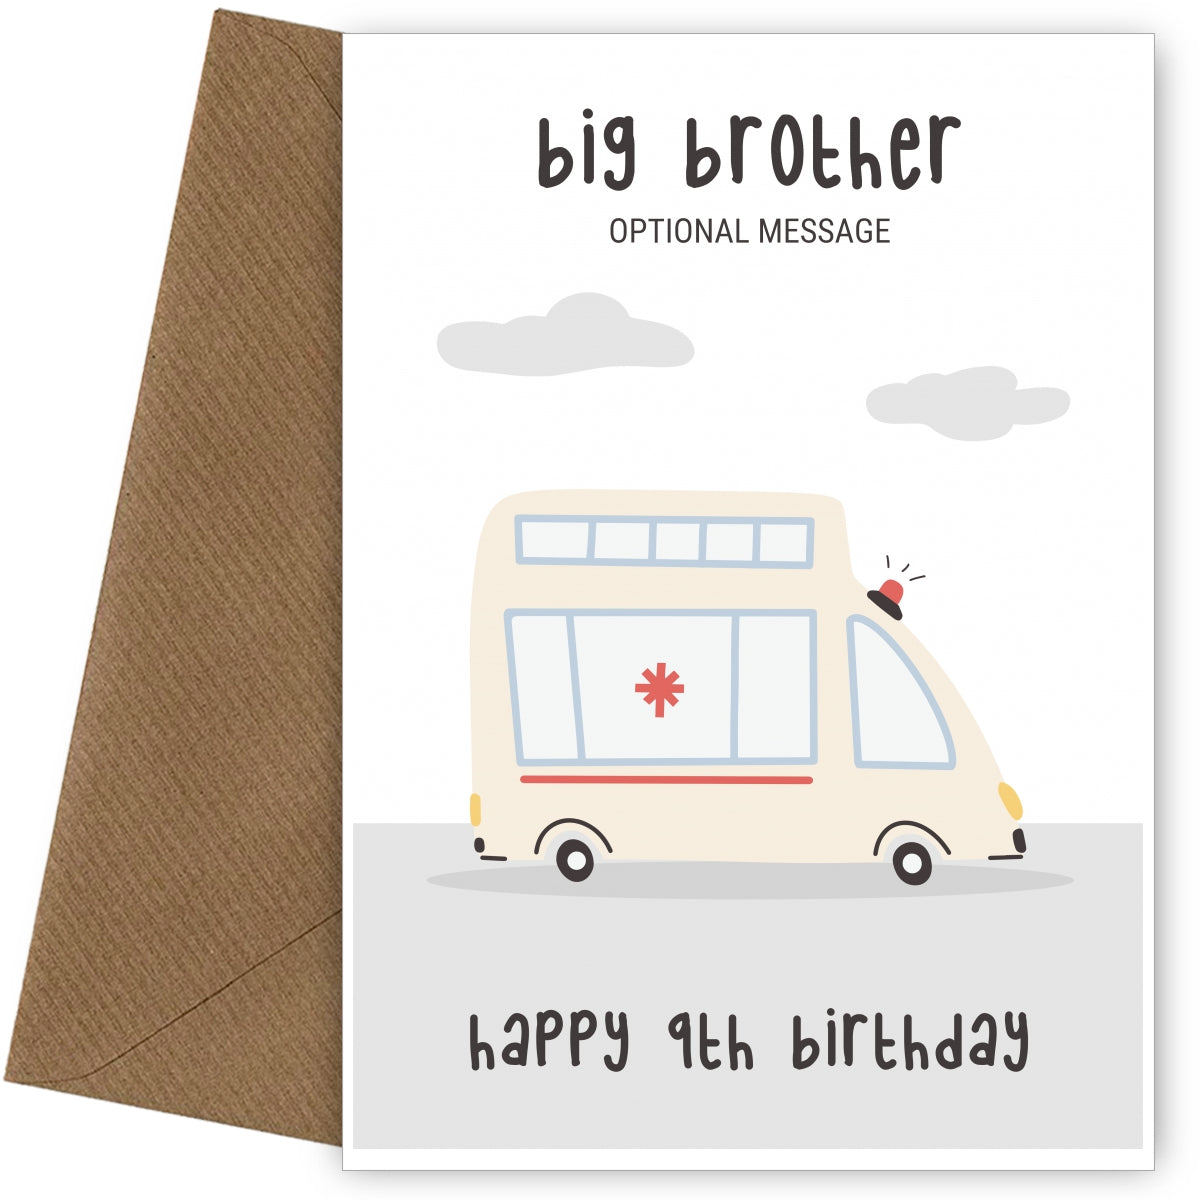 Fun Vehicles 9th Birthday Card for Big Brother - Ambulance